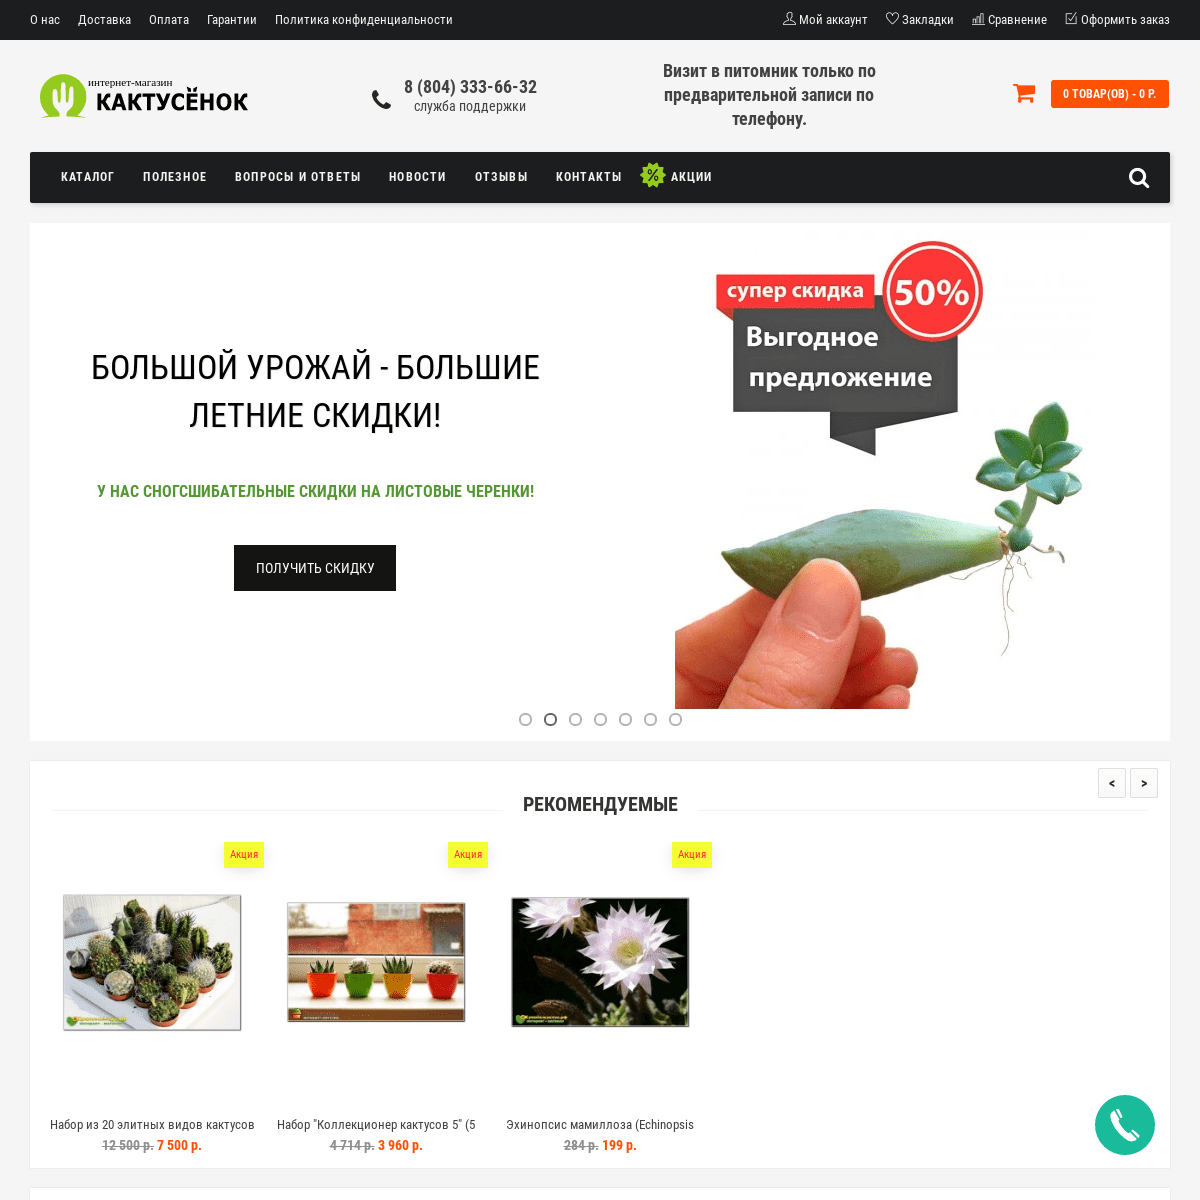 A complete backup of cactusenok.ru